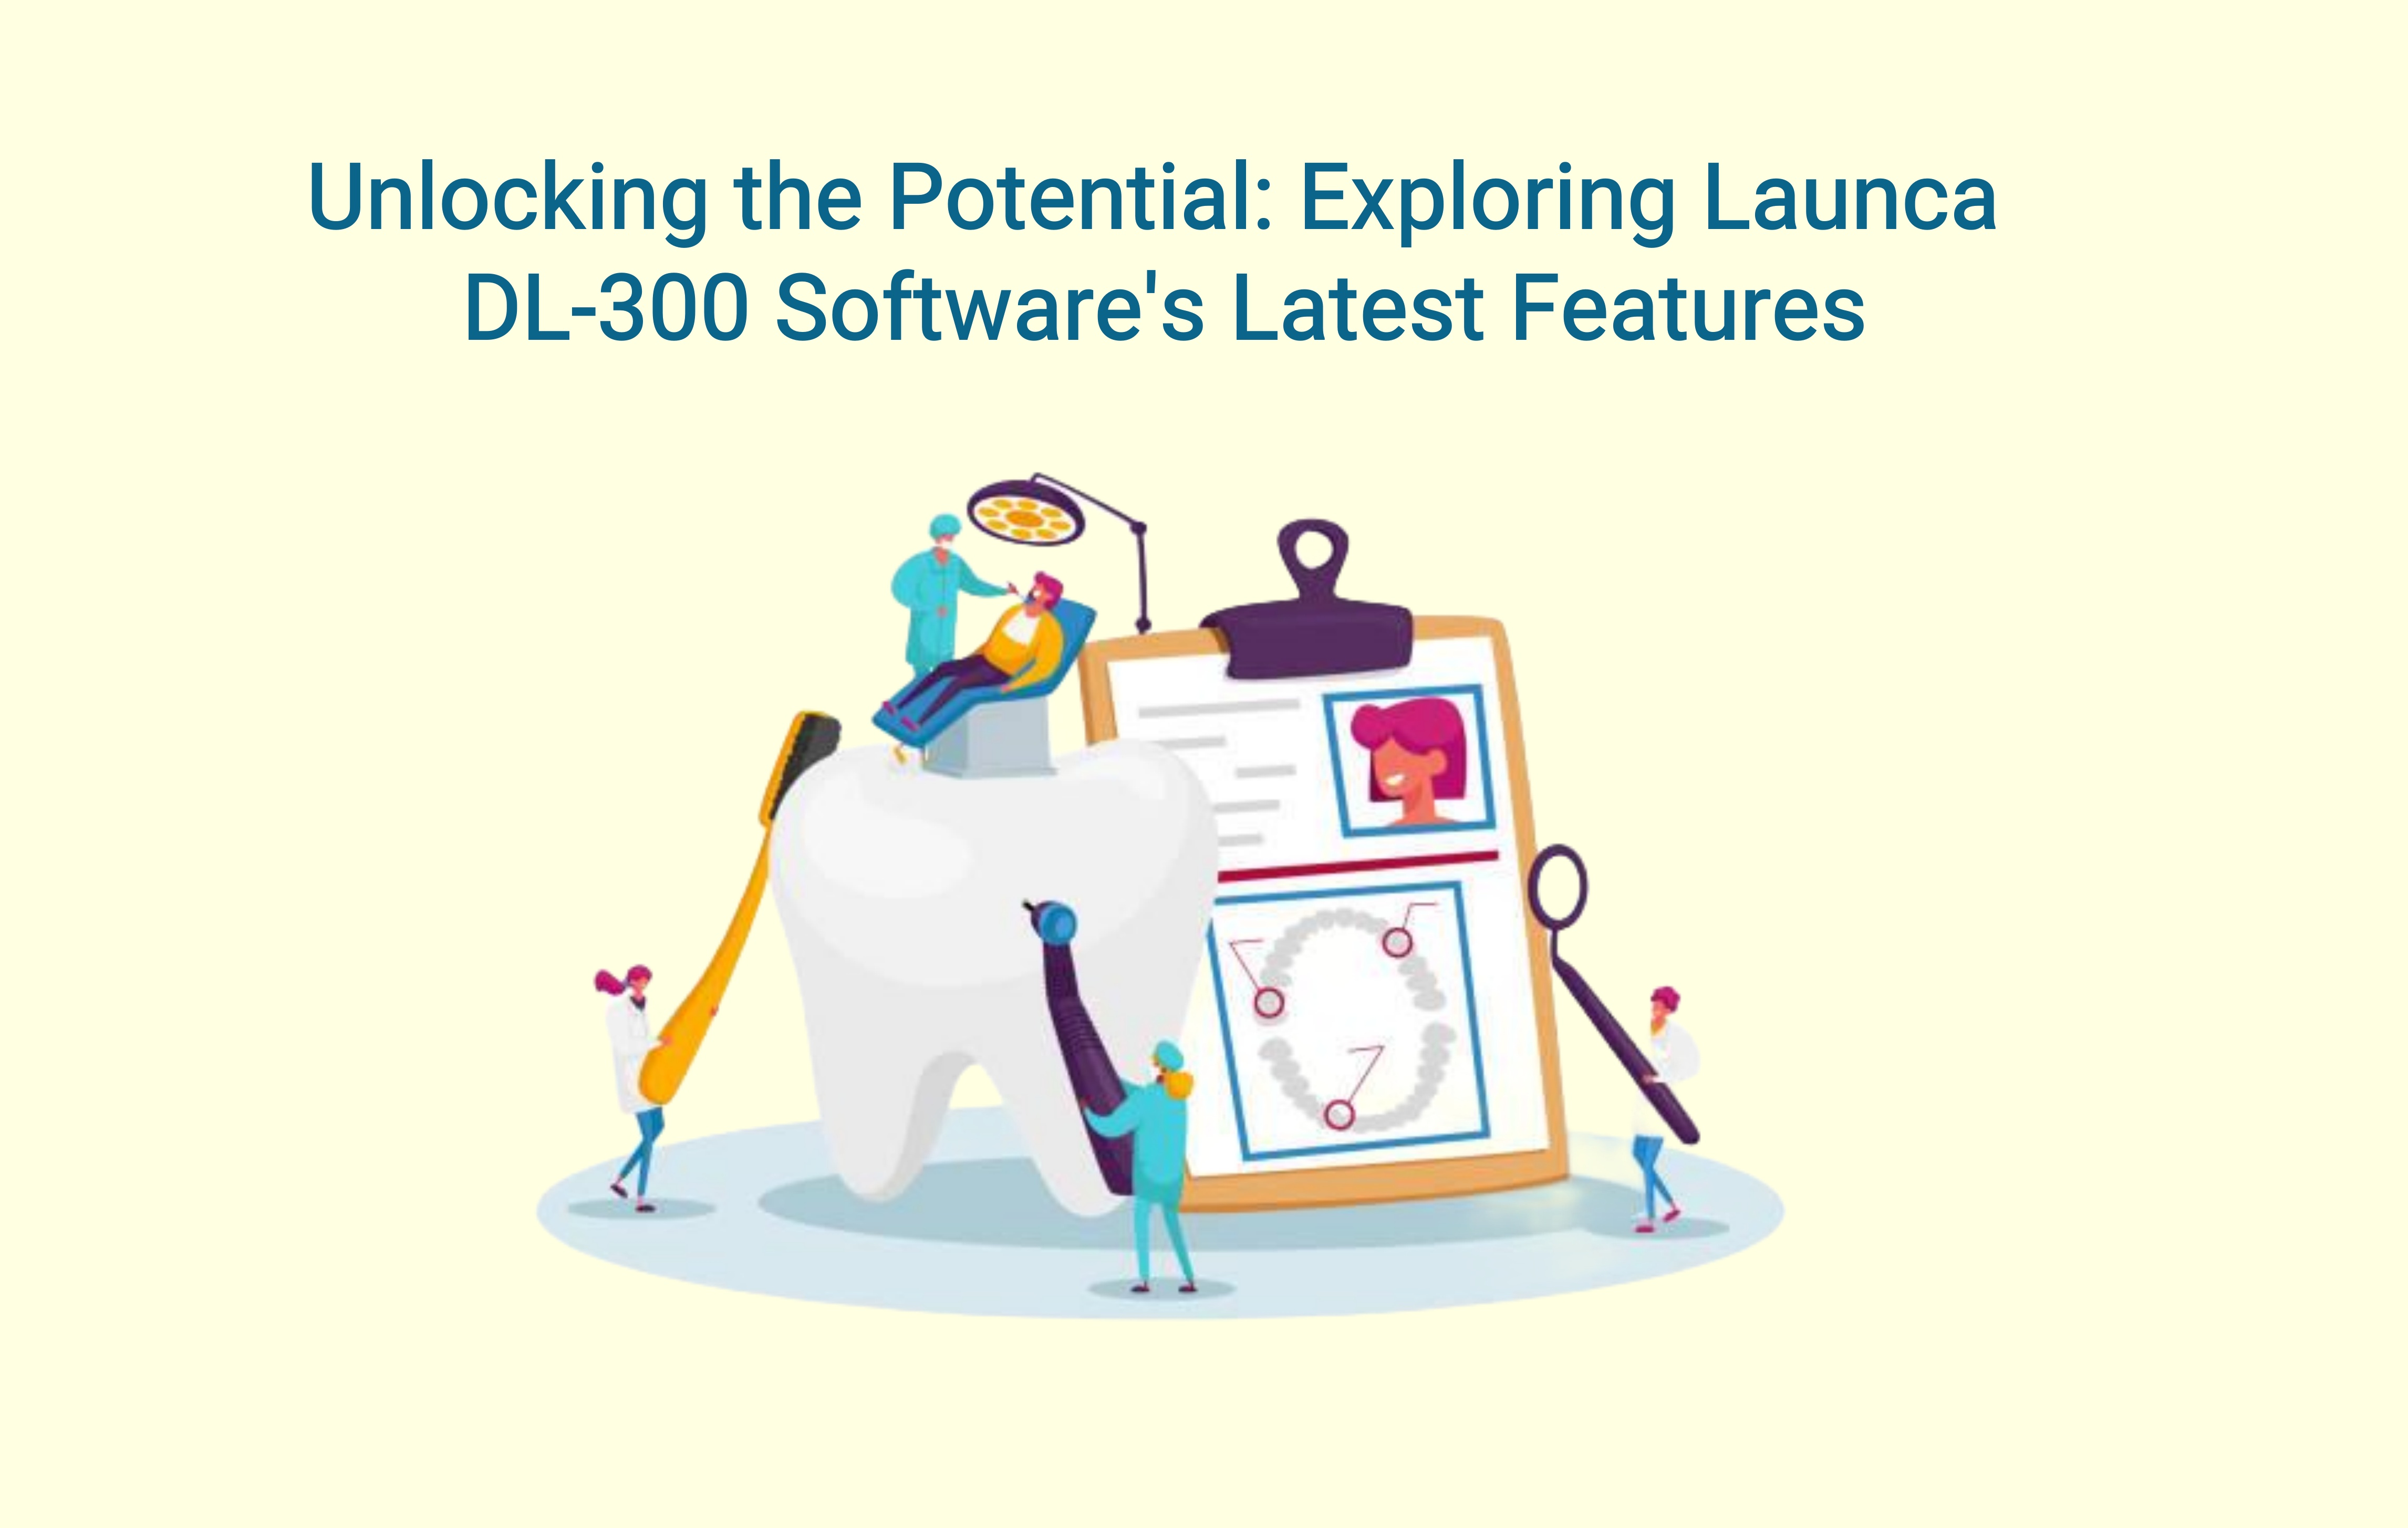 Unlocking the Potential: Exploring Launca DL-300 Software’s Latest Features